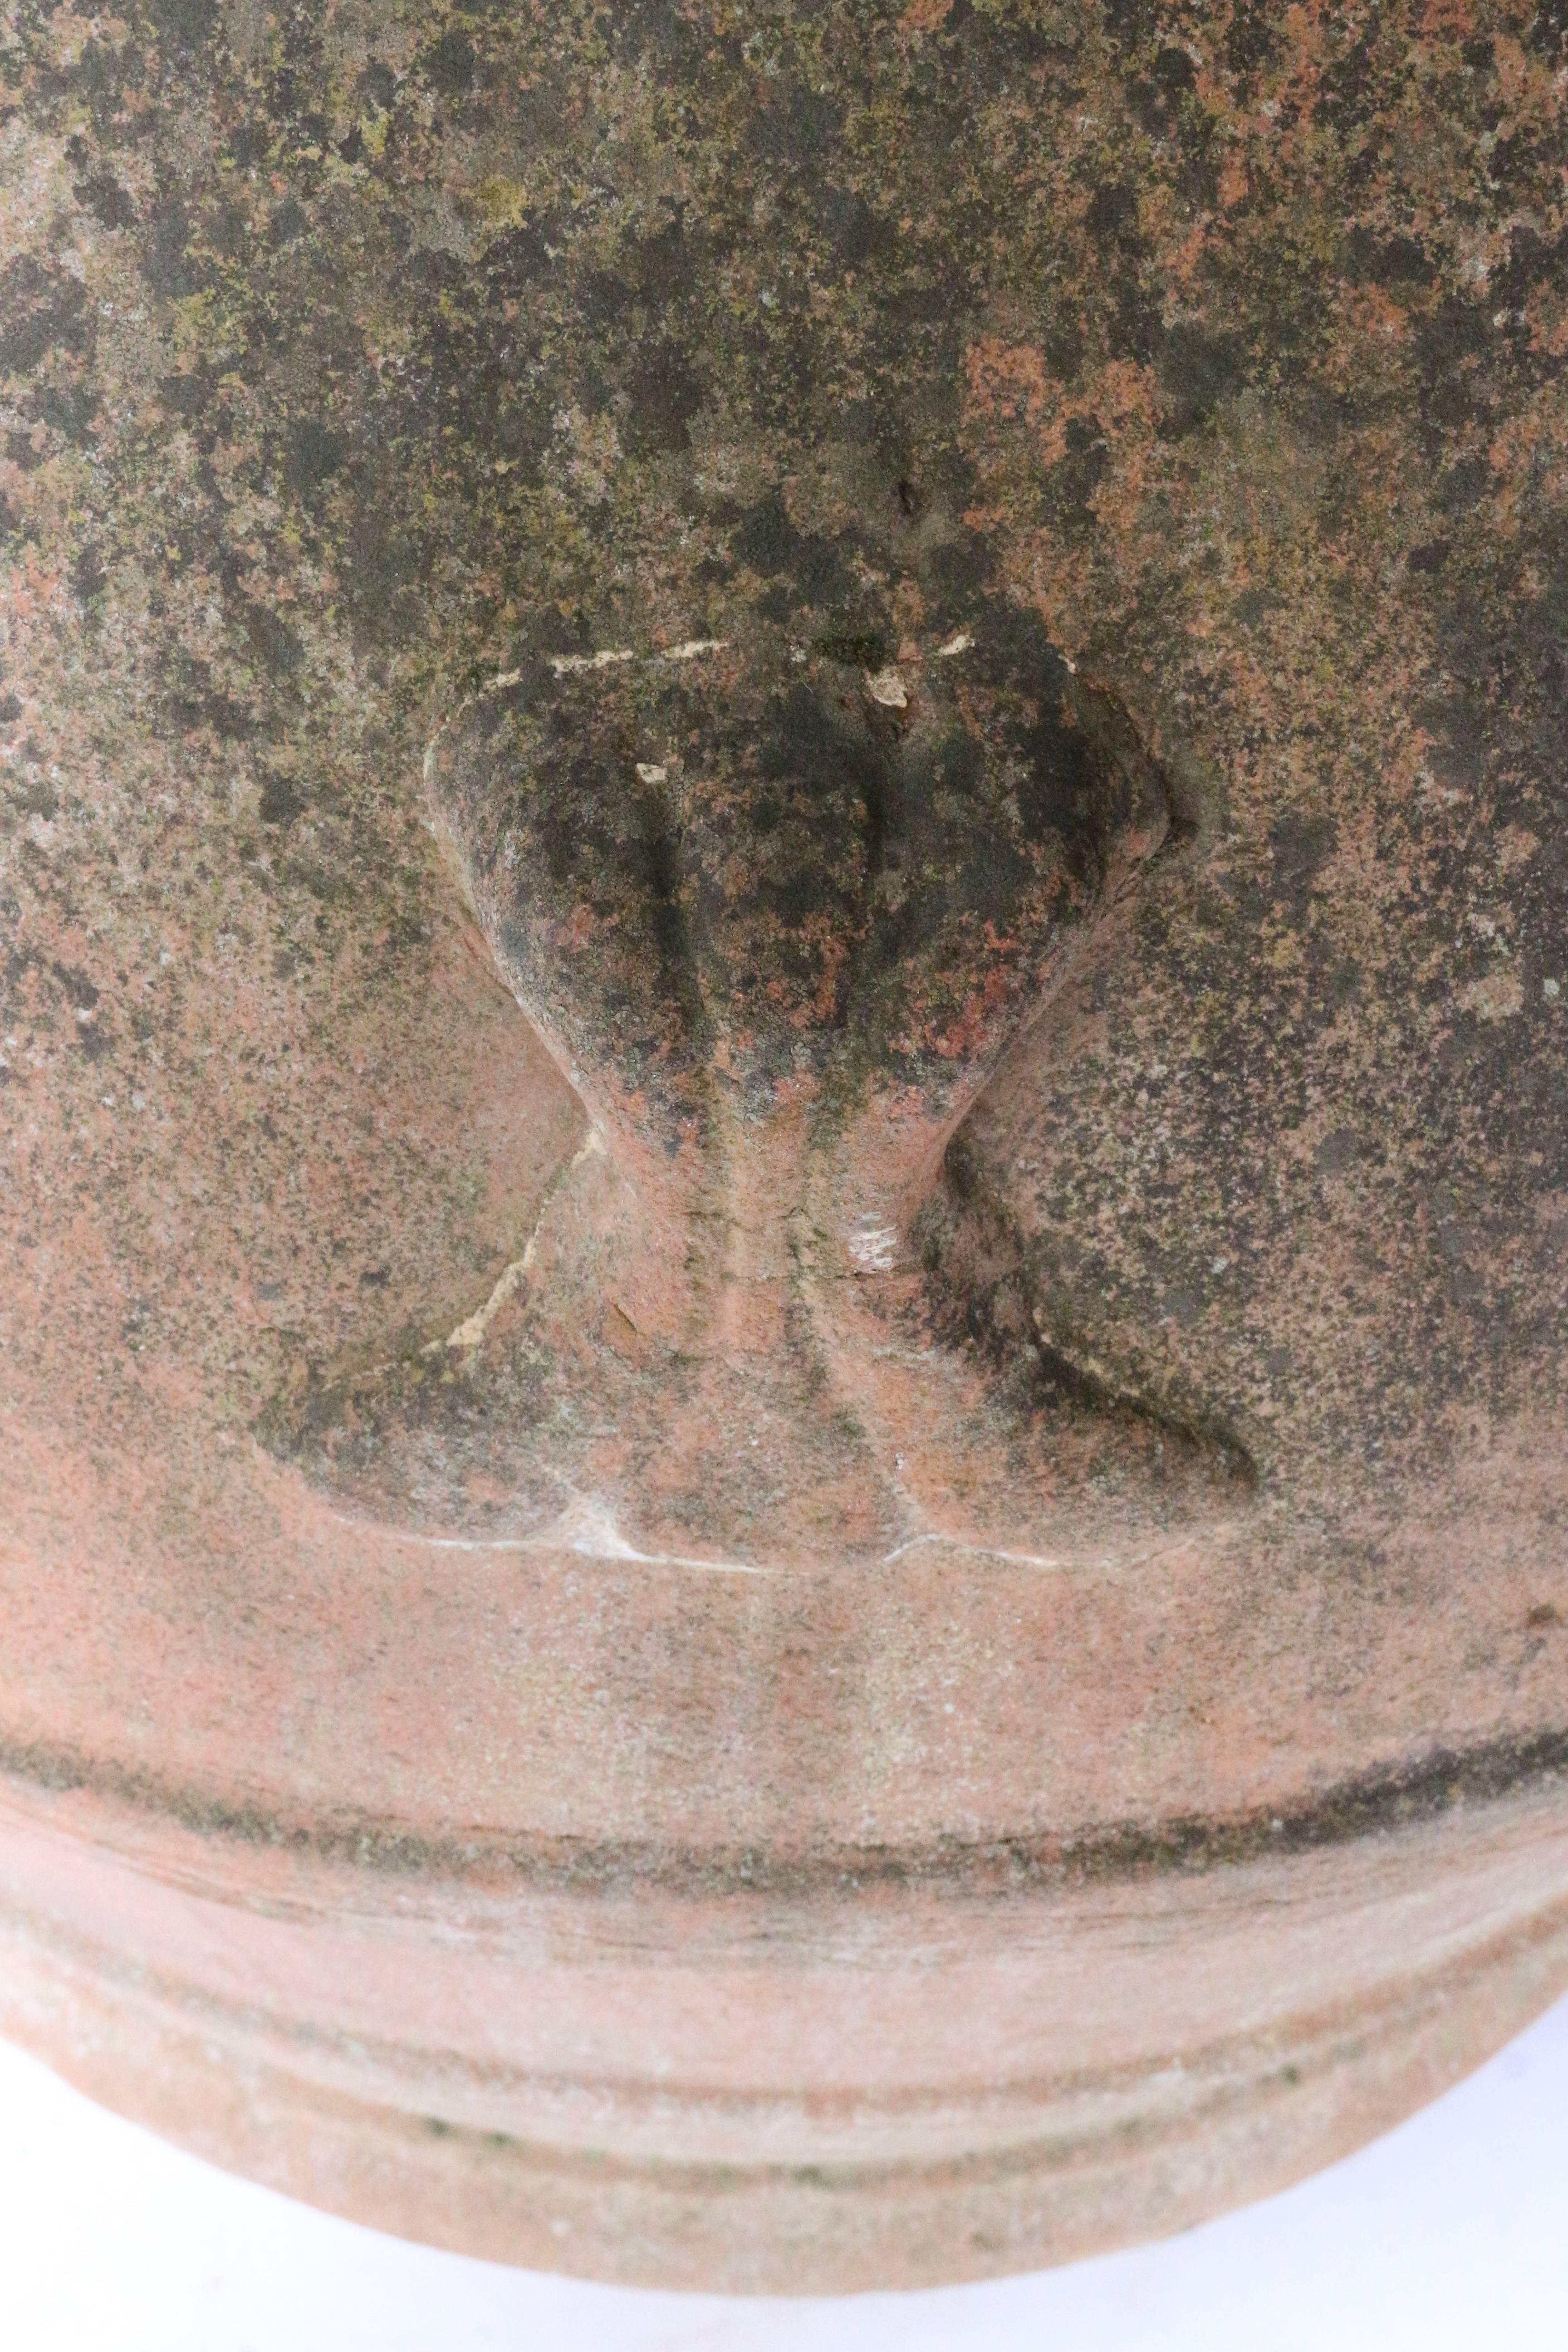 terracotta olive oil jars